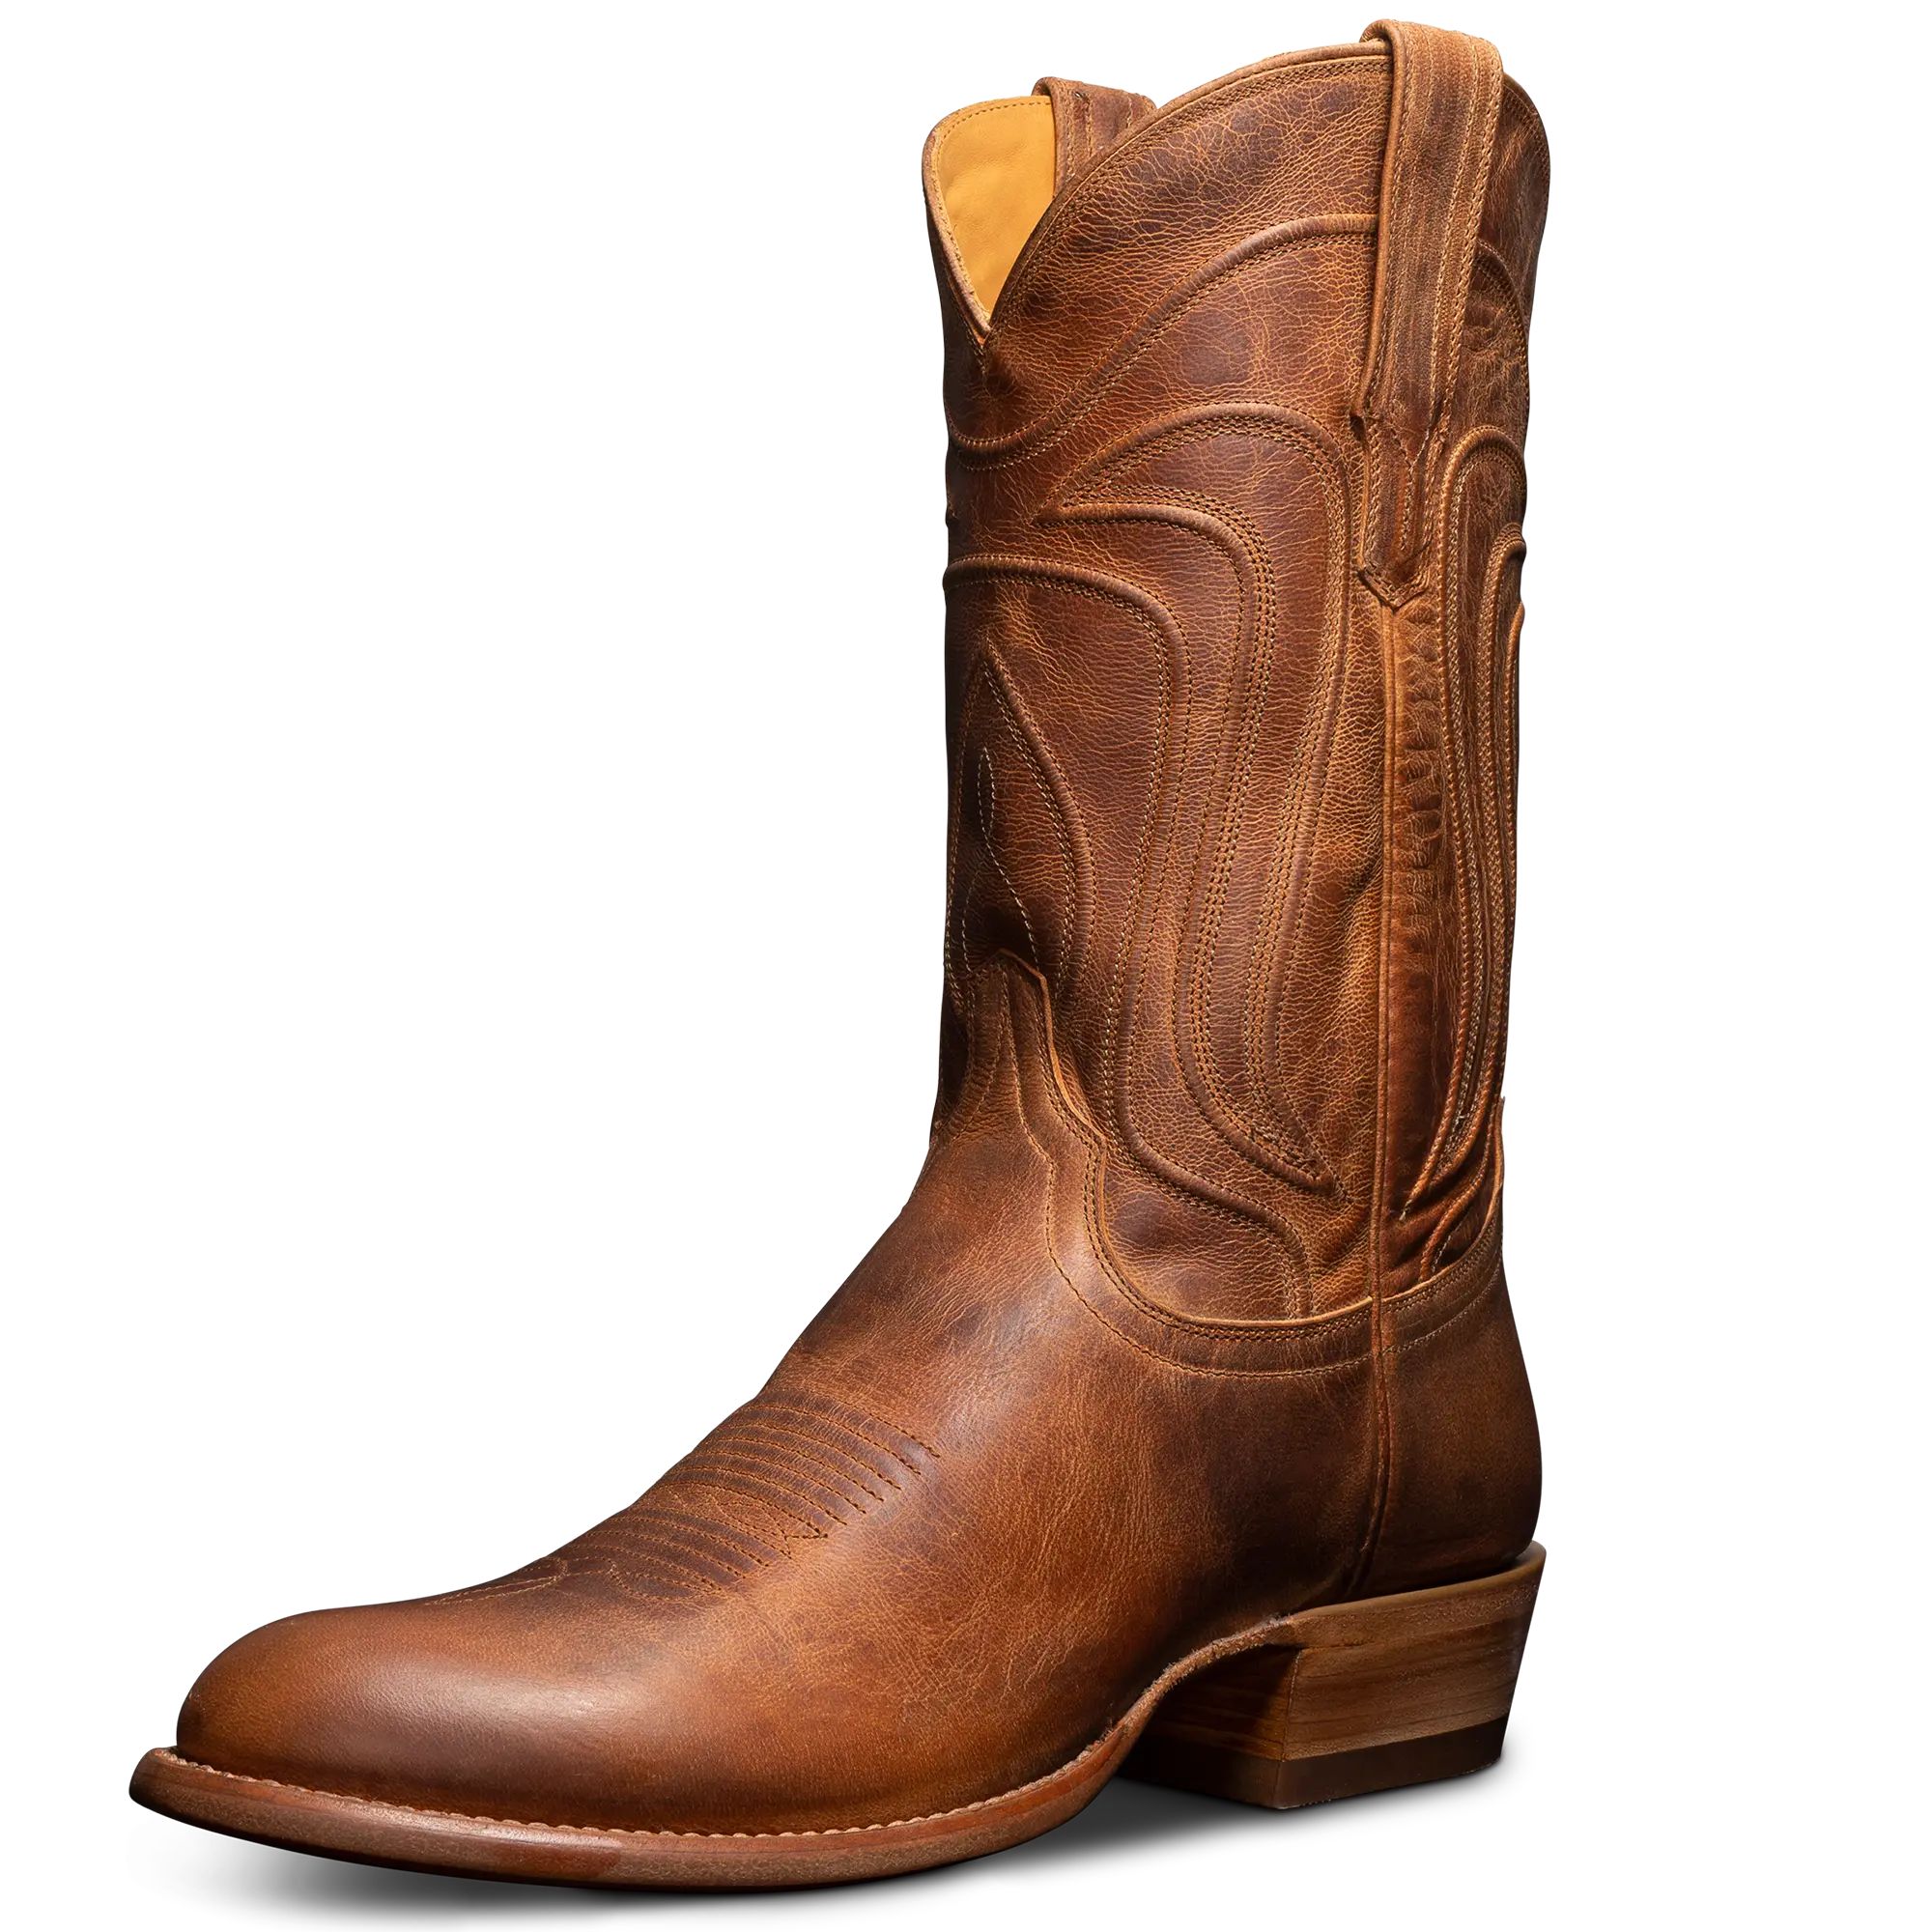 Traditional Cowboy Boots |  The Cartwright - Scotch | Tecovas | Tecovas